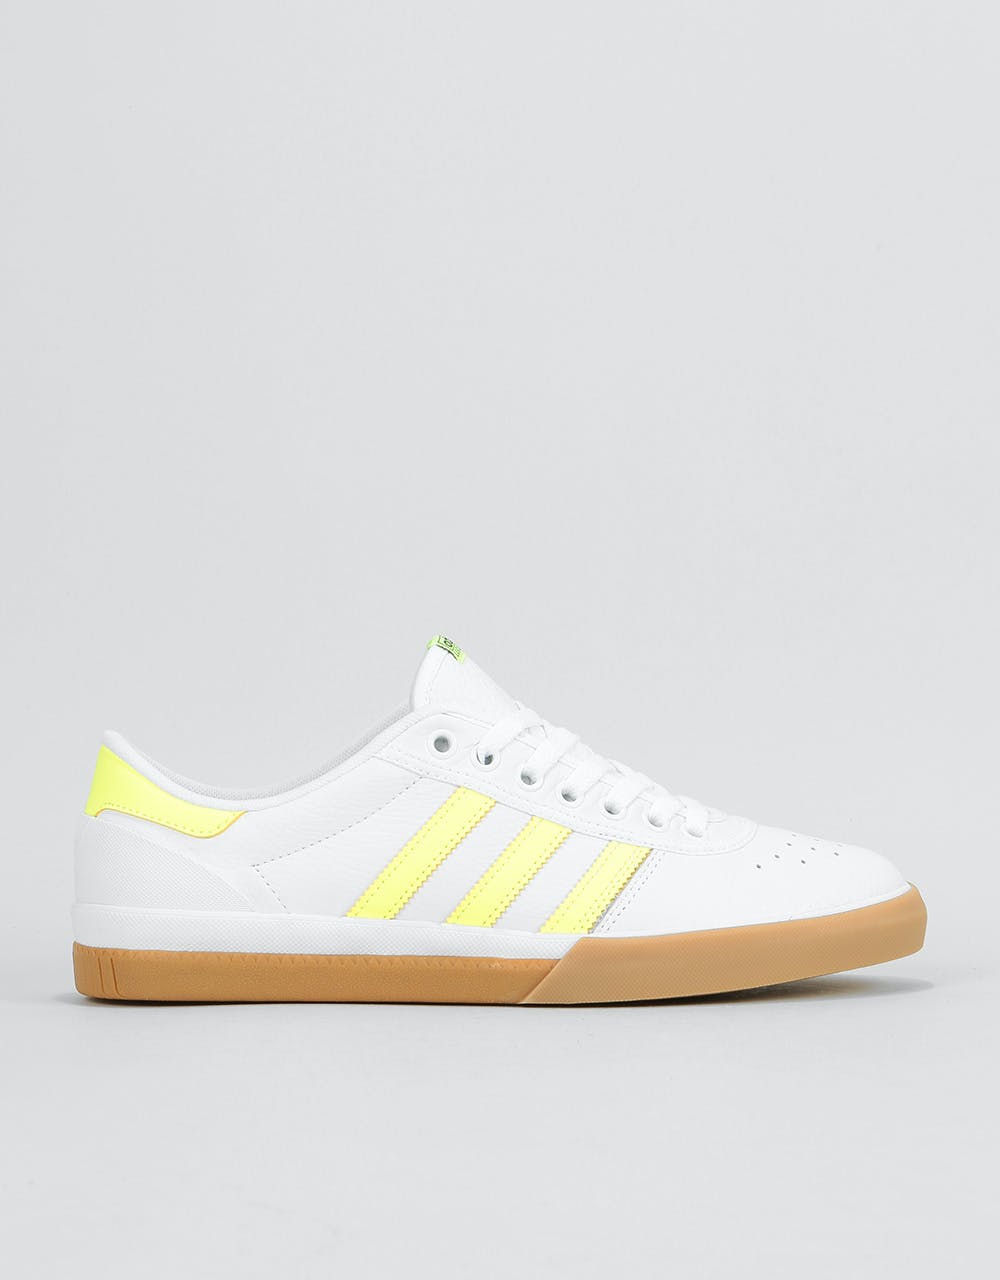 Adidas Lucas Premiere Skate Shoes - White/Hi-Res Yellow/Gum